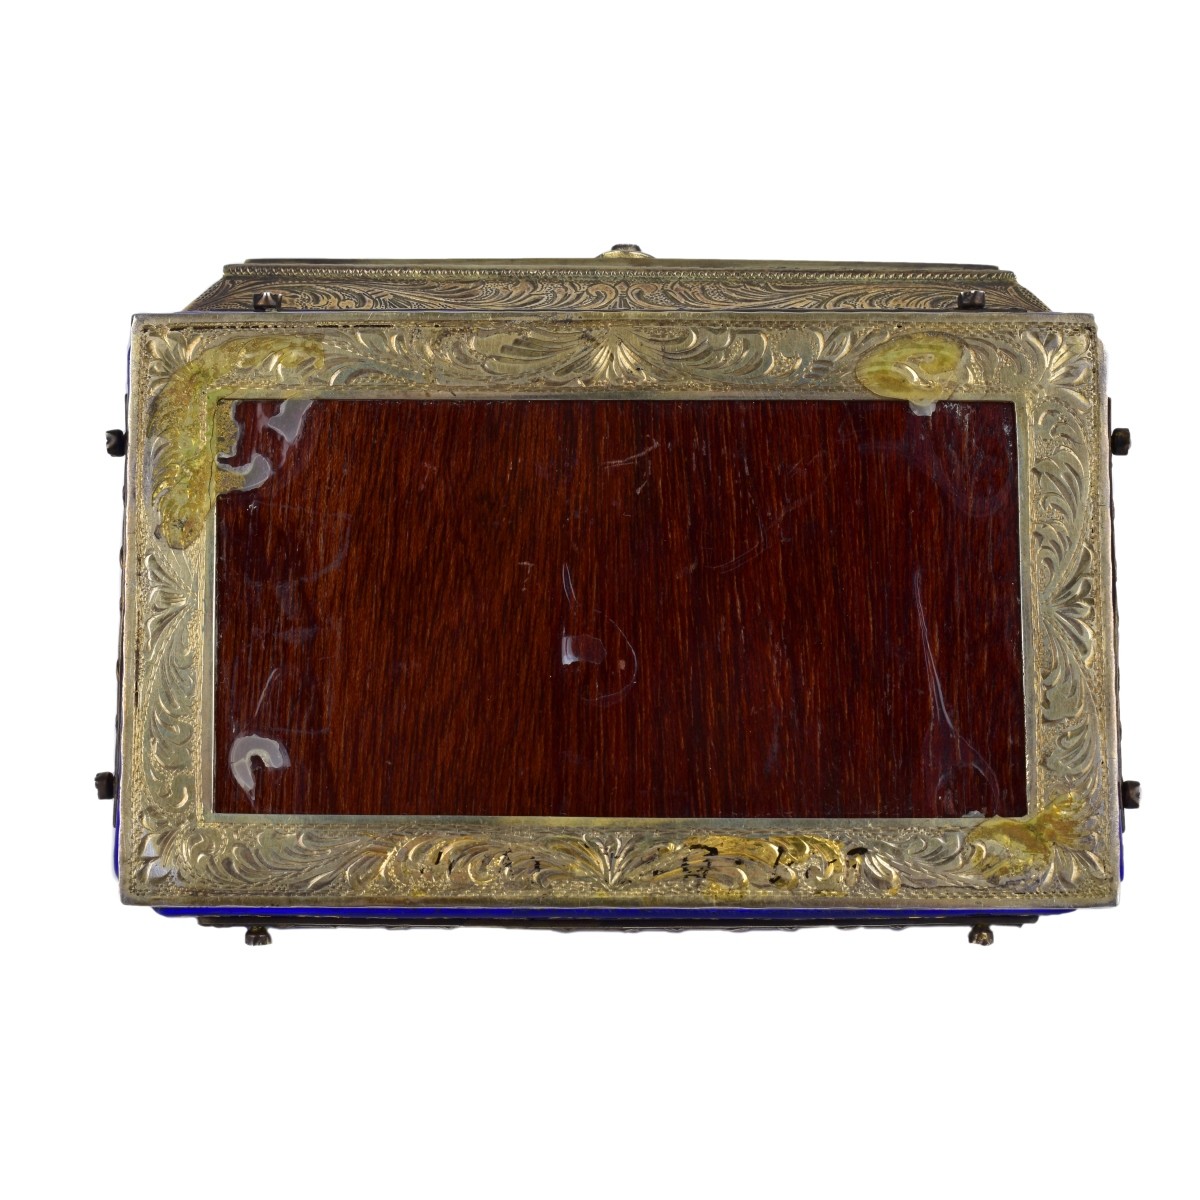 Antique Silver Enameled Jeweled Box